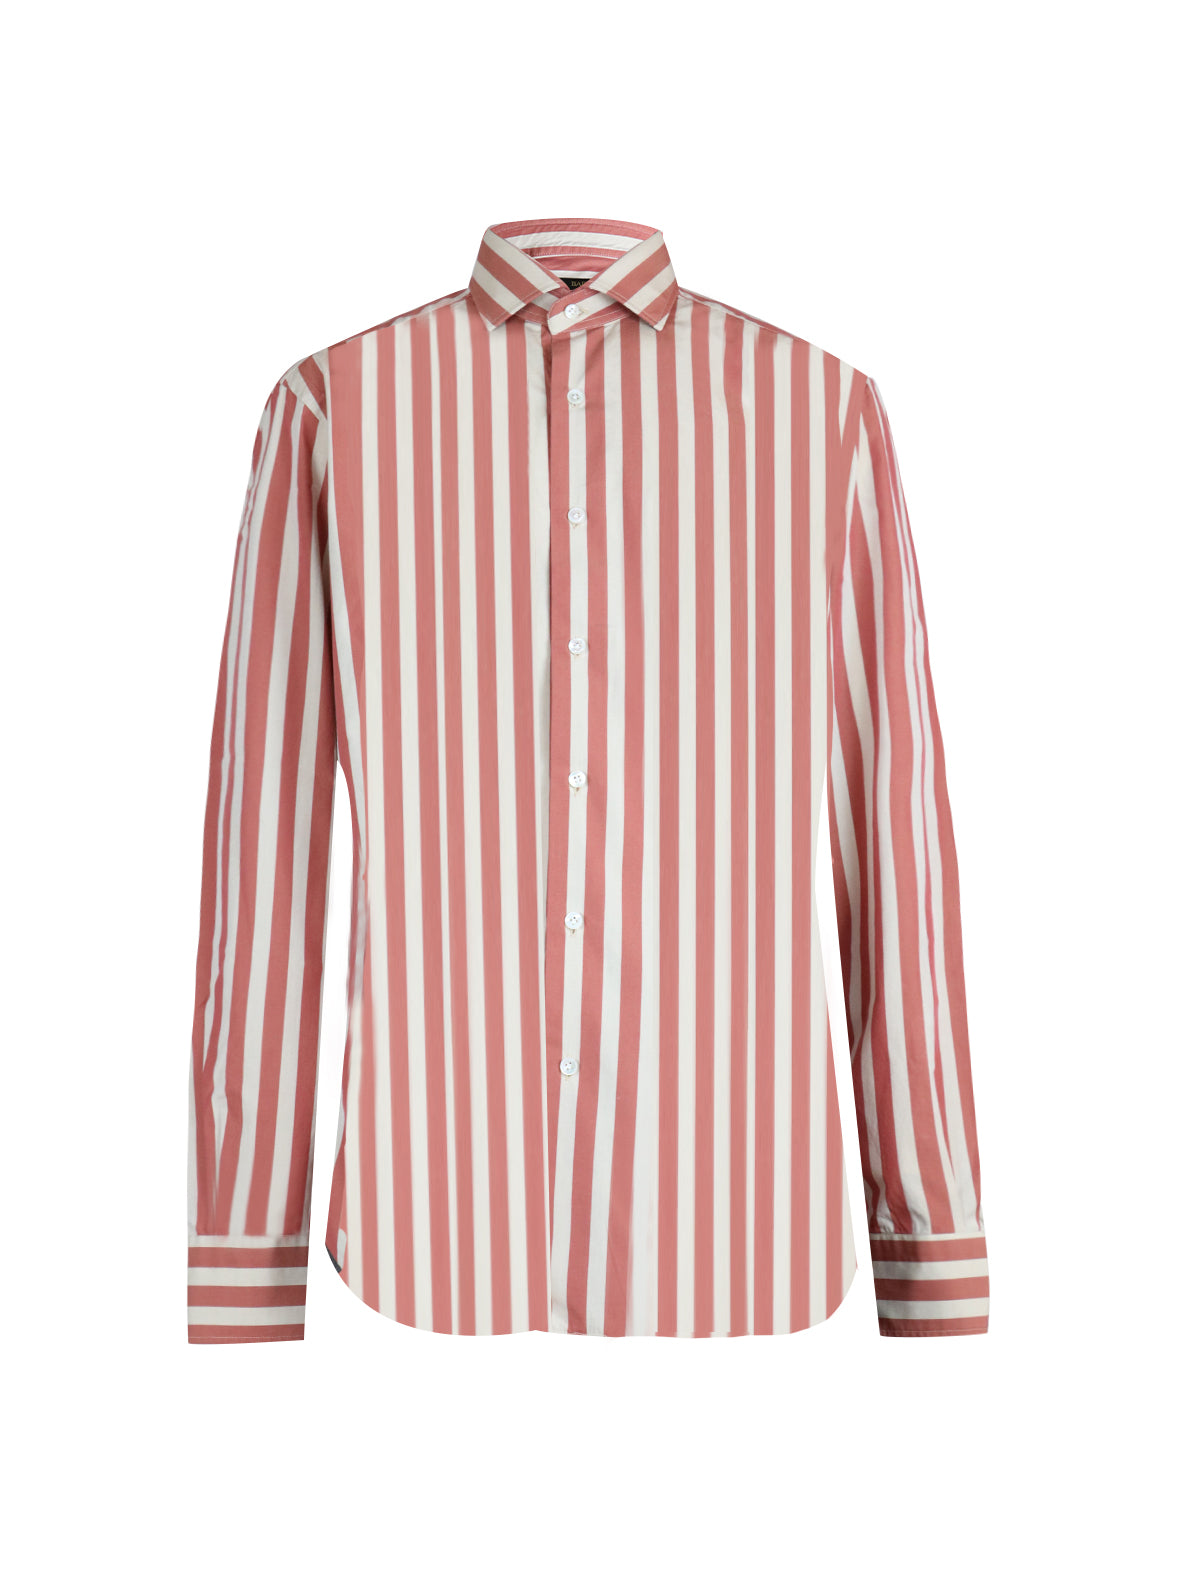 Barba Napoli Crisp Cotton Shirt in Red / White Stripes